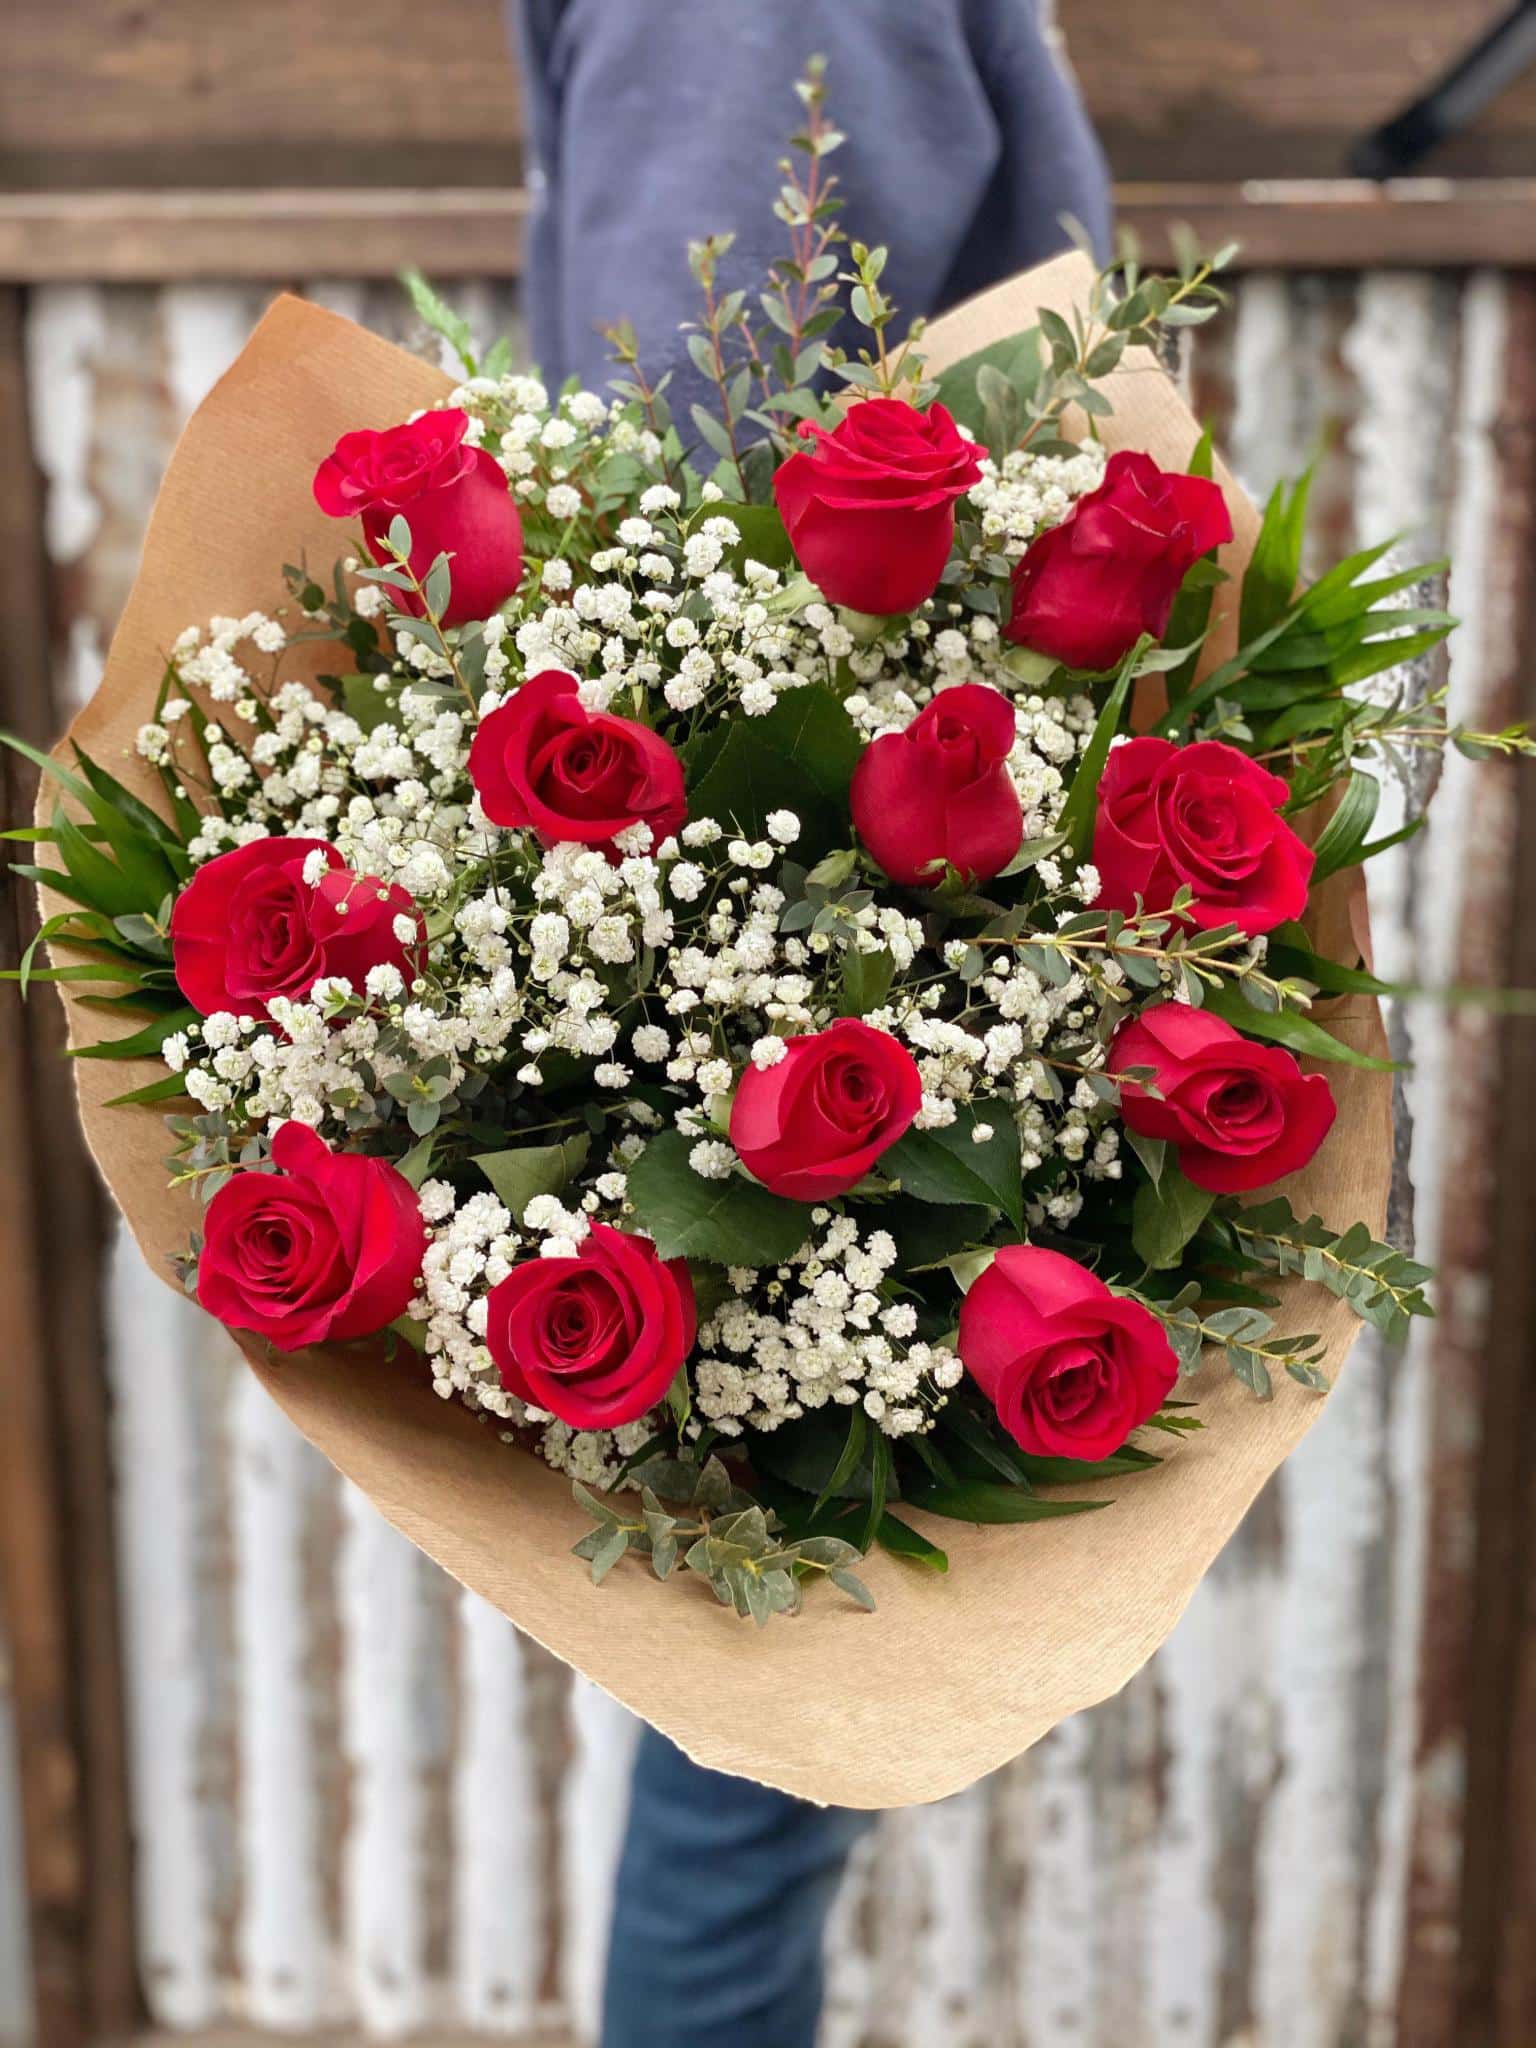 Freedom Red Rose Bouquet - Le jardin de Mathilde